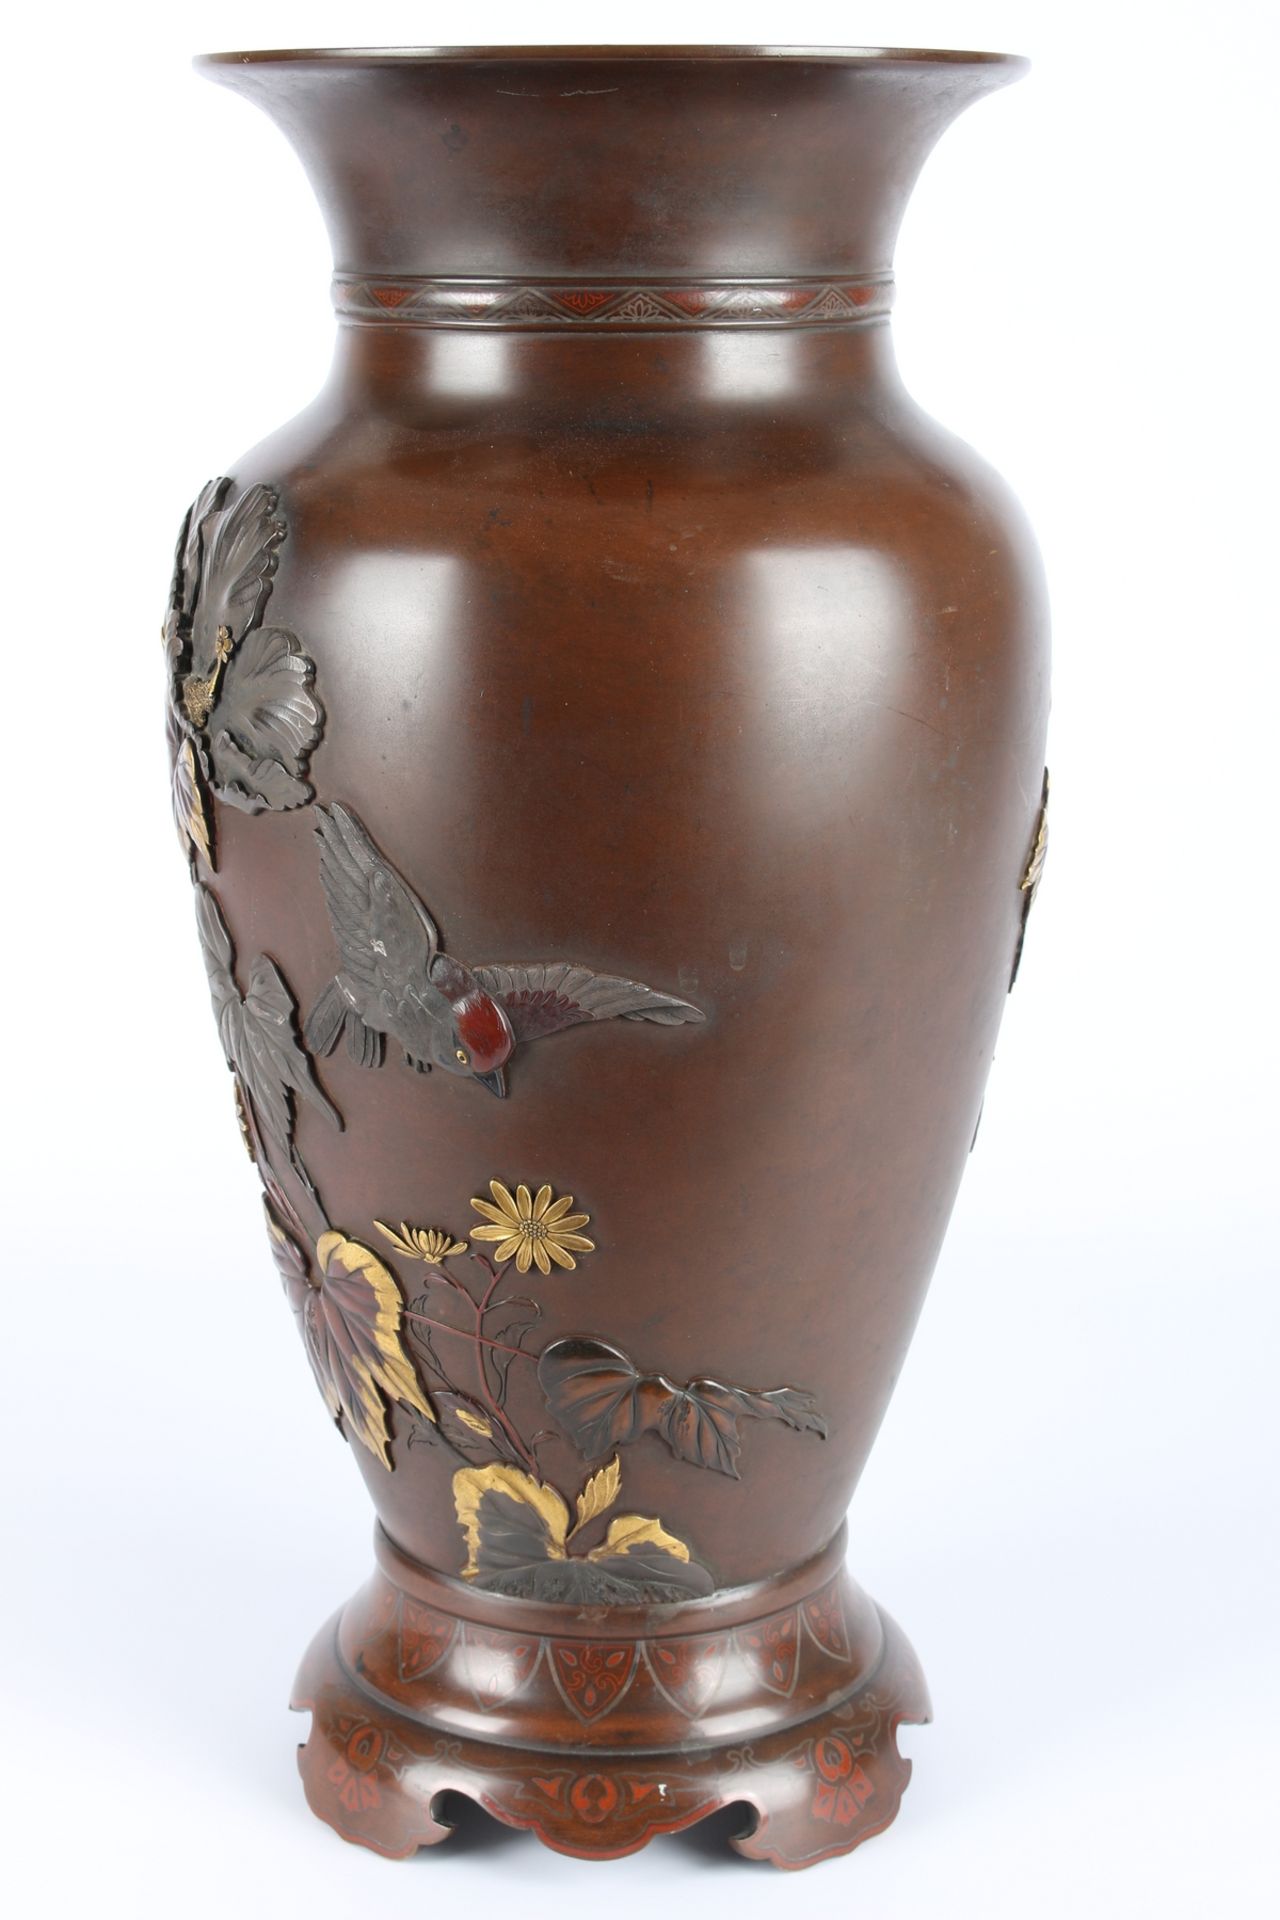 Japan Bronze Vase, Meiji-Period (1868-1912) japanese vase, - Image 2 of 7